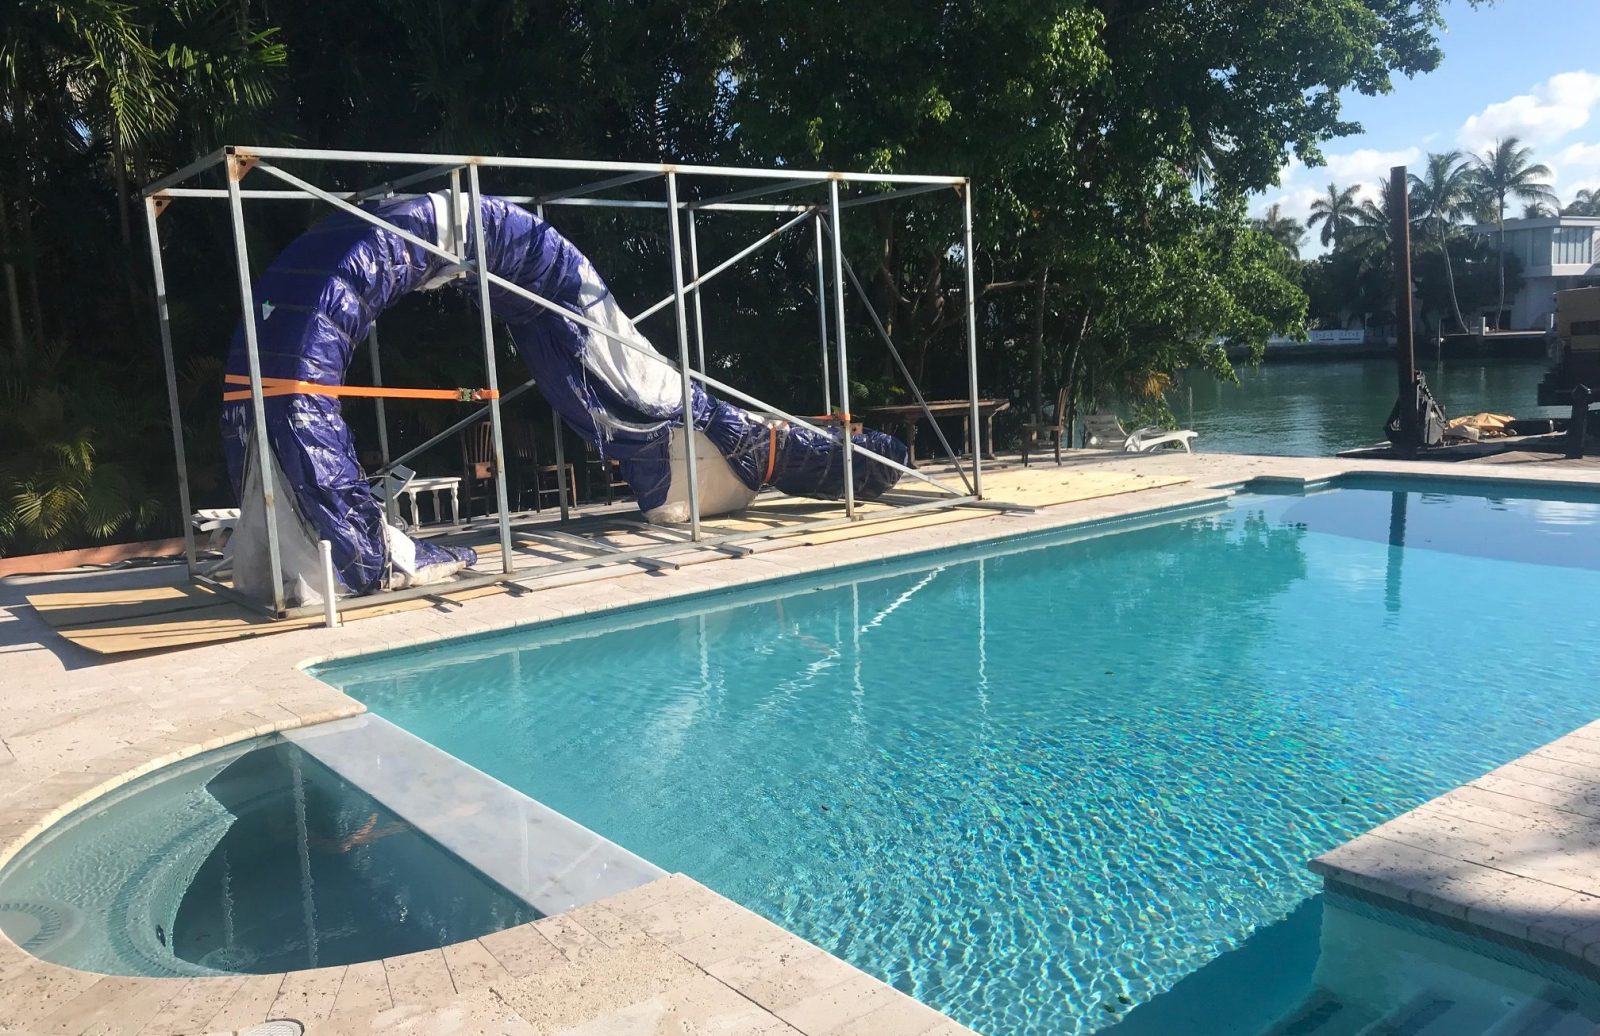 Splinterworks luxury pool slide Miami Florida installation